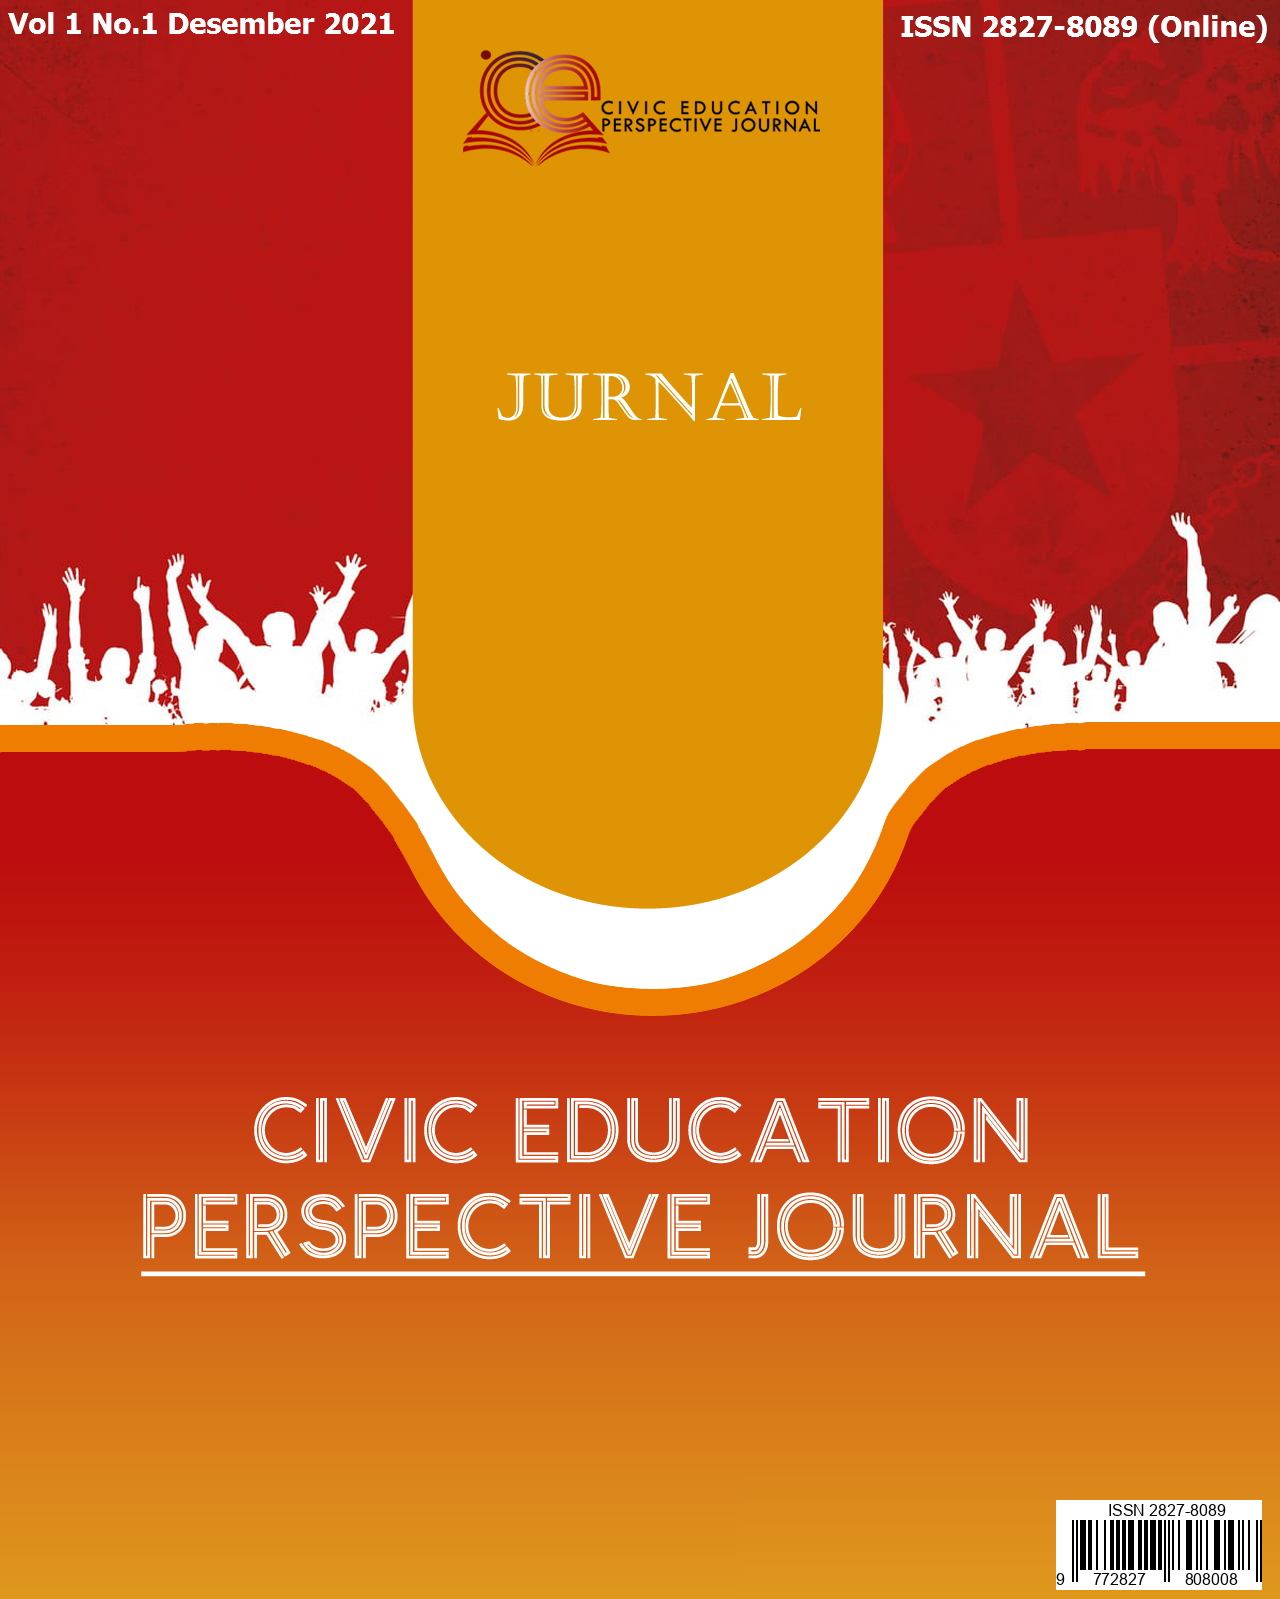 					Lihat Vol 1 No 3 (2021): Civic Education Perspective Journal
				